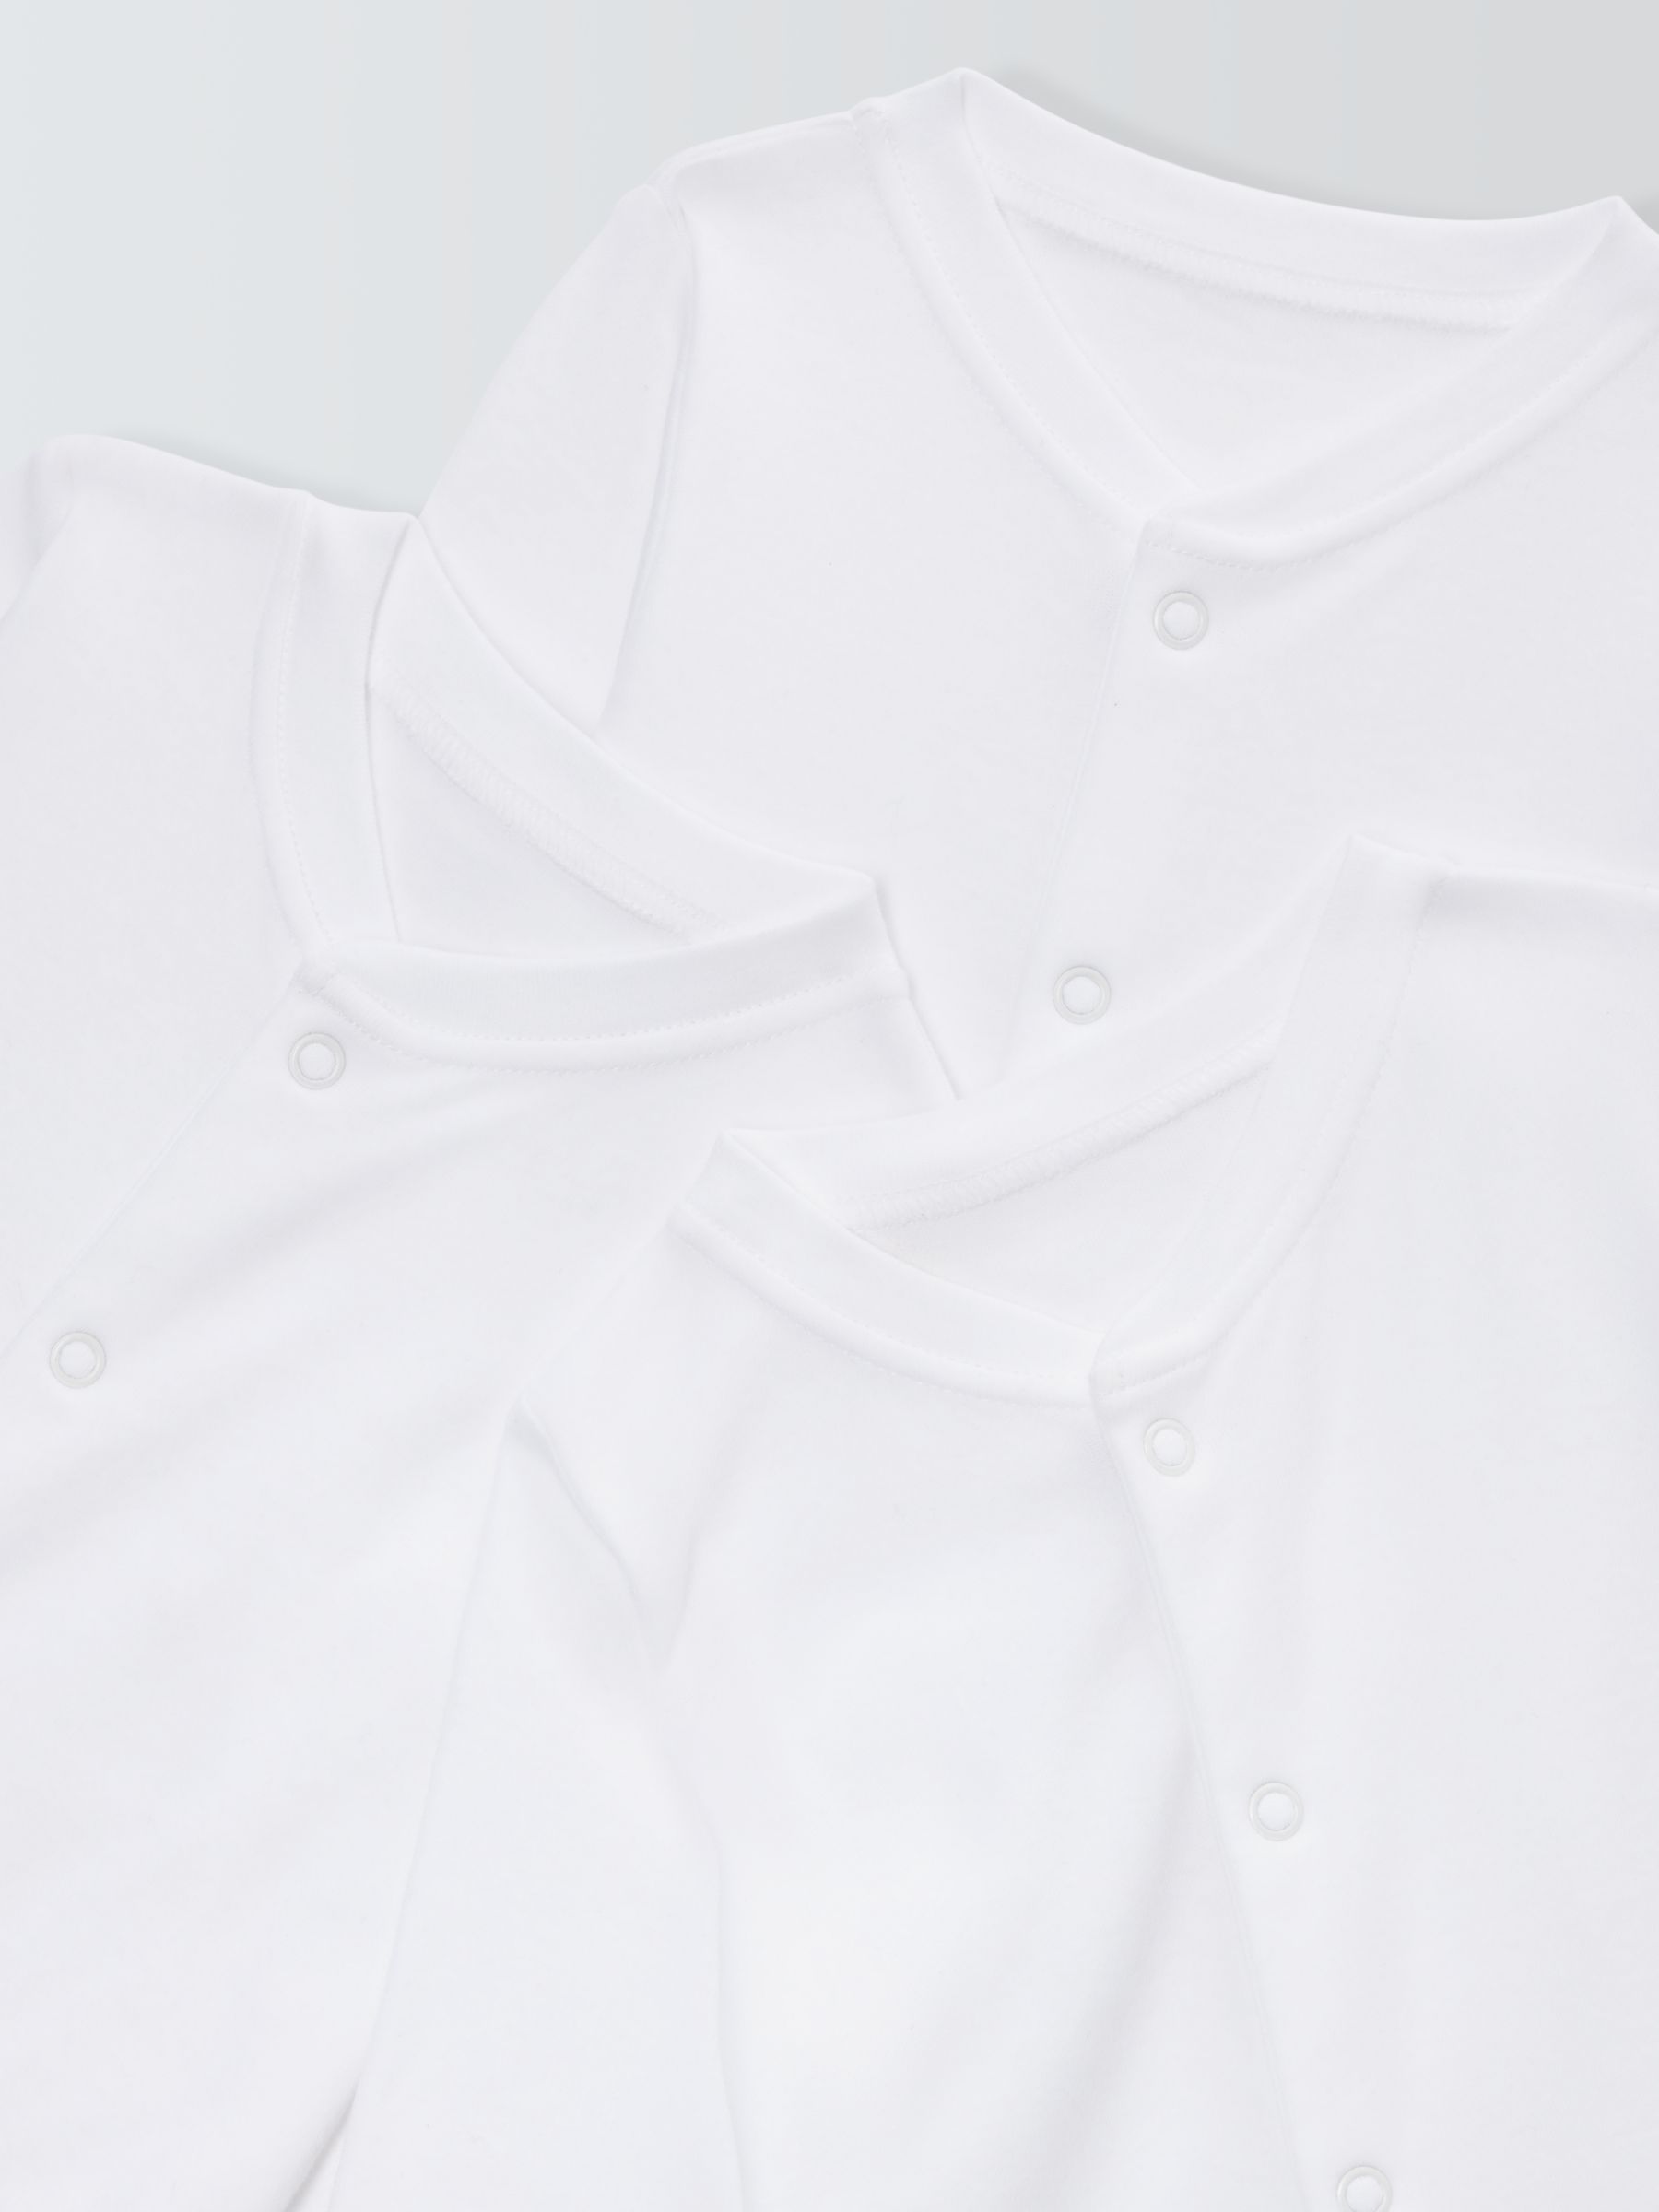 Buy John Lewis Baby Long Sleeve GOTS Organic Cotton Sleepsuit, Pack of 5, White Online at johnlewis.com